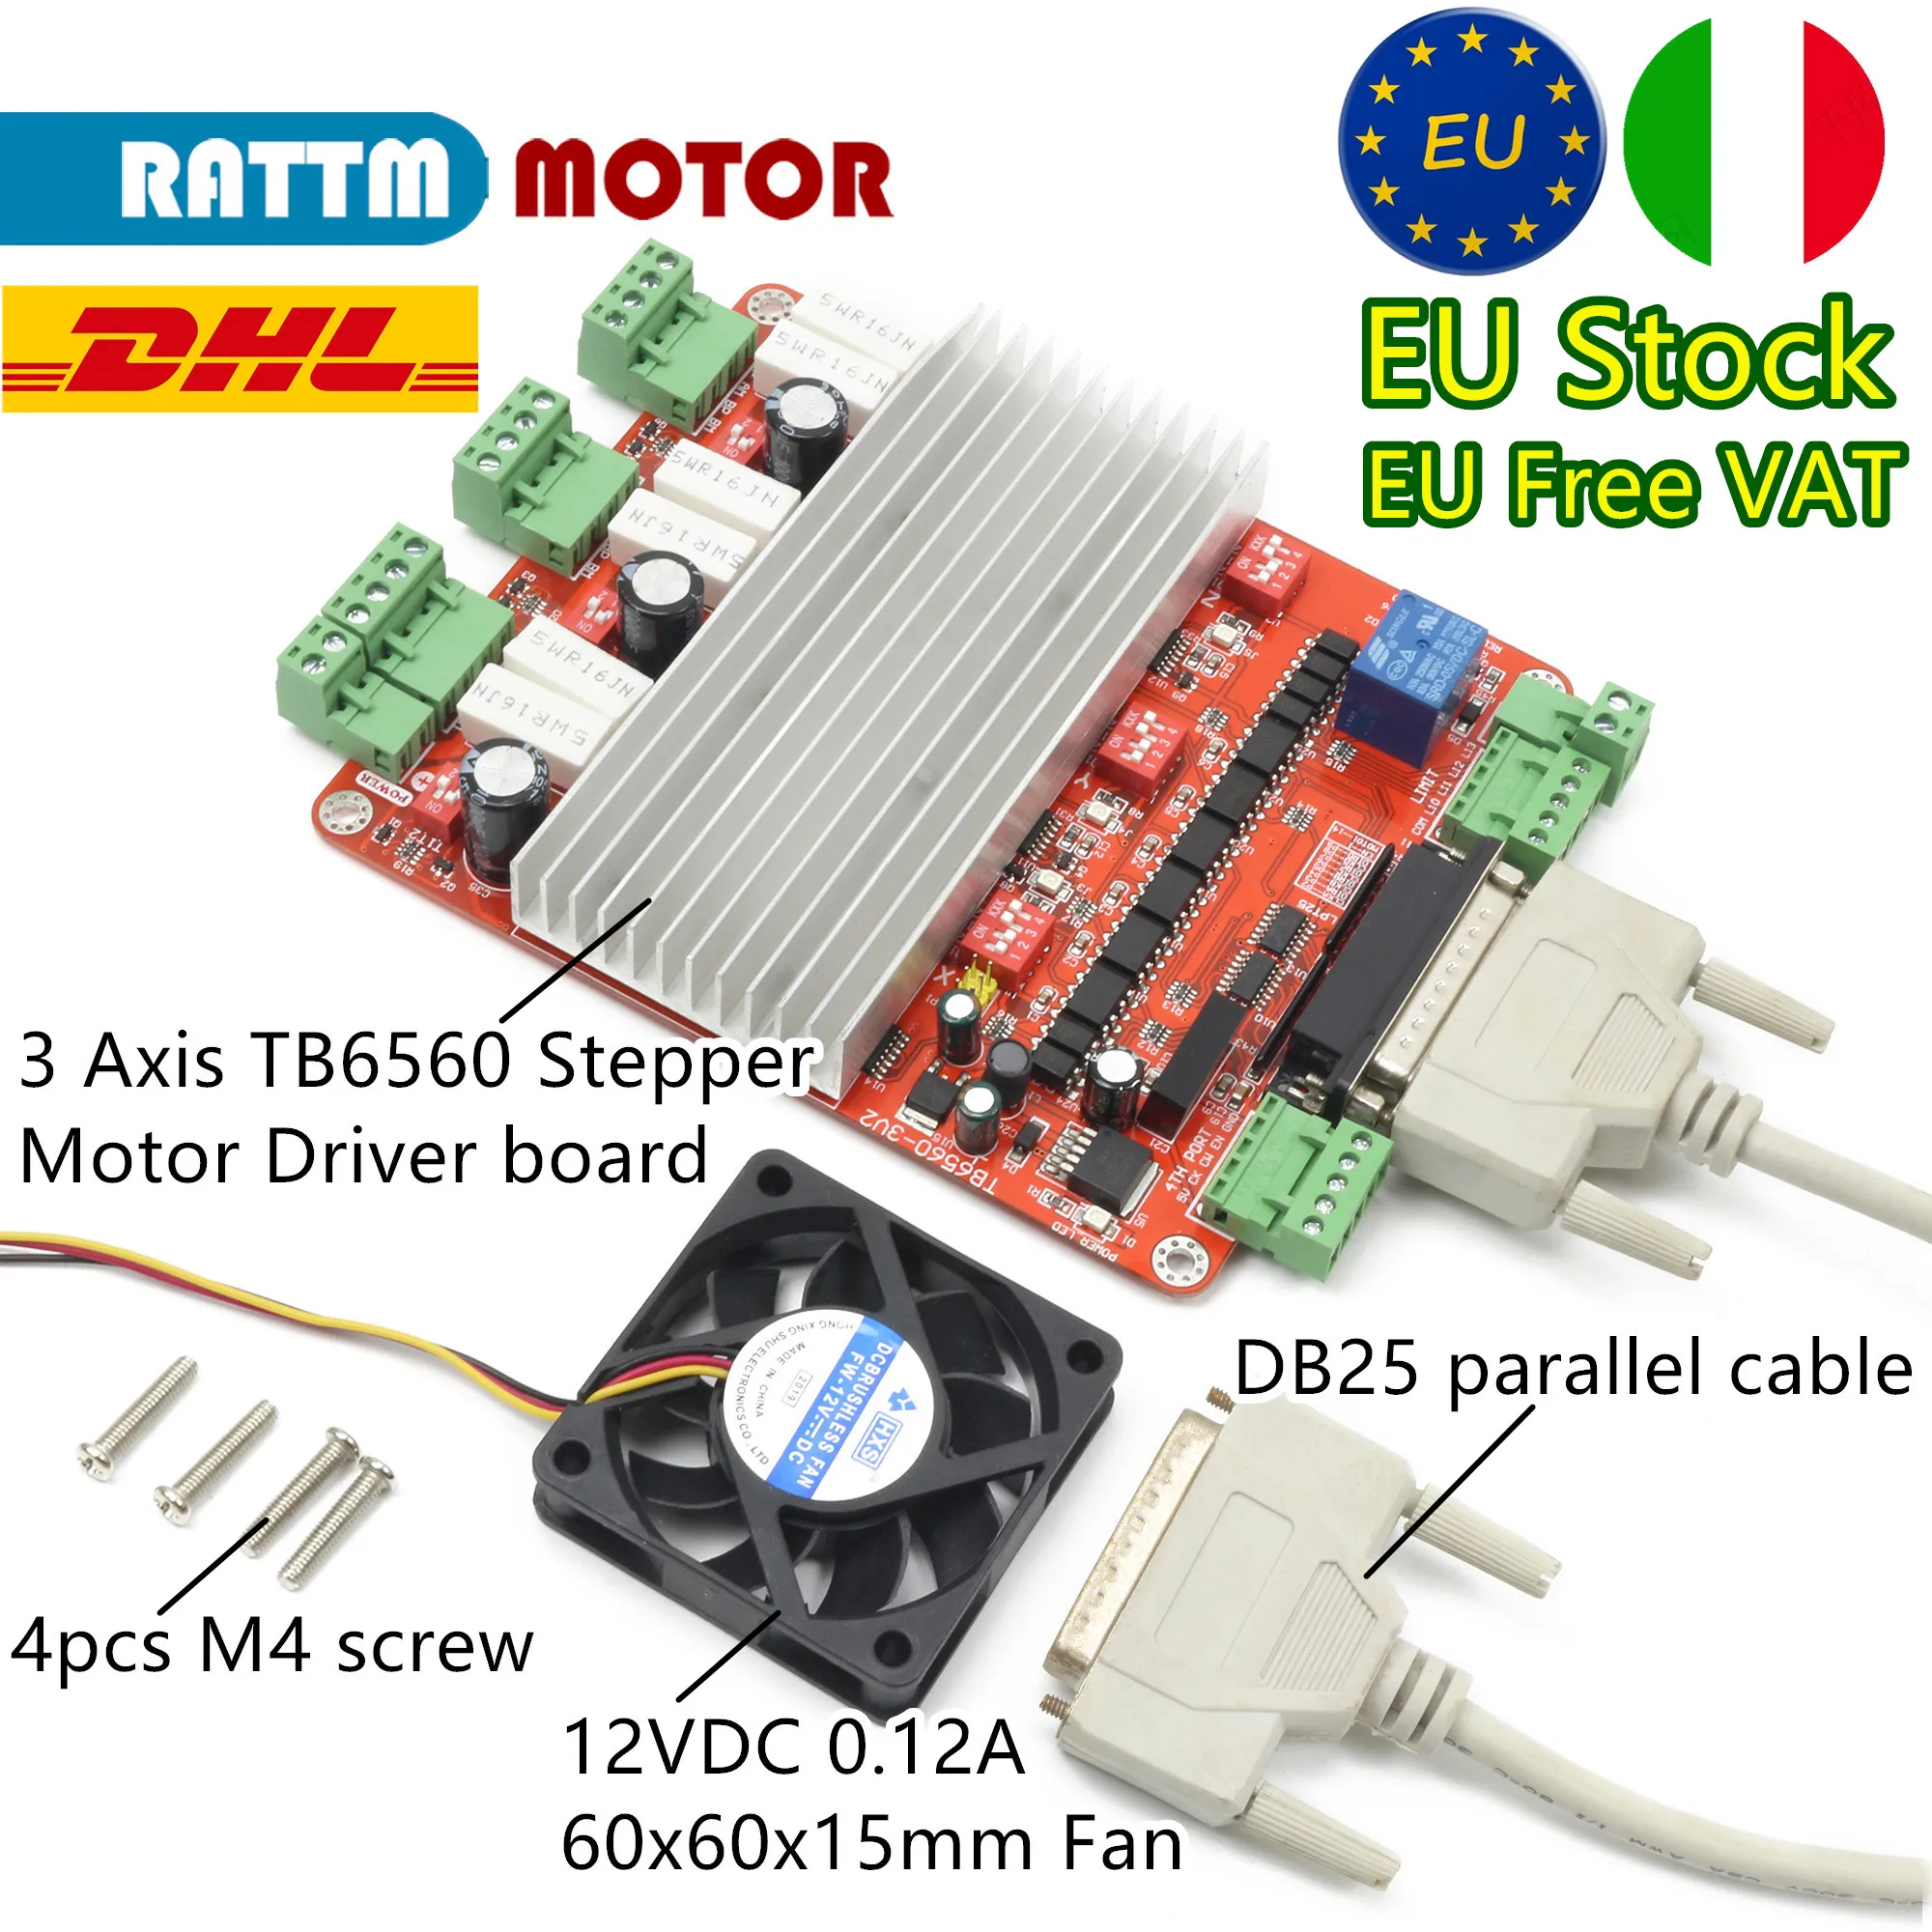 CNC 3 Axis MACH3 TB6560 Stepper Motor Controller Board 3.5A DB25 Port+Fan【In EU】 